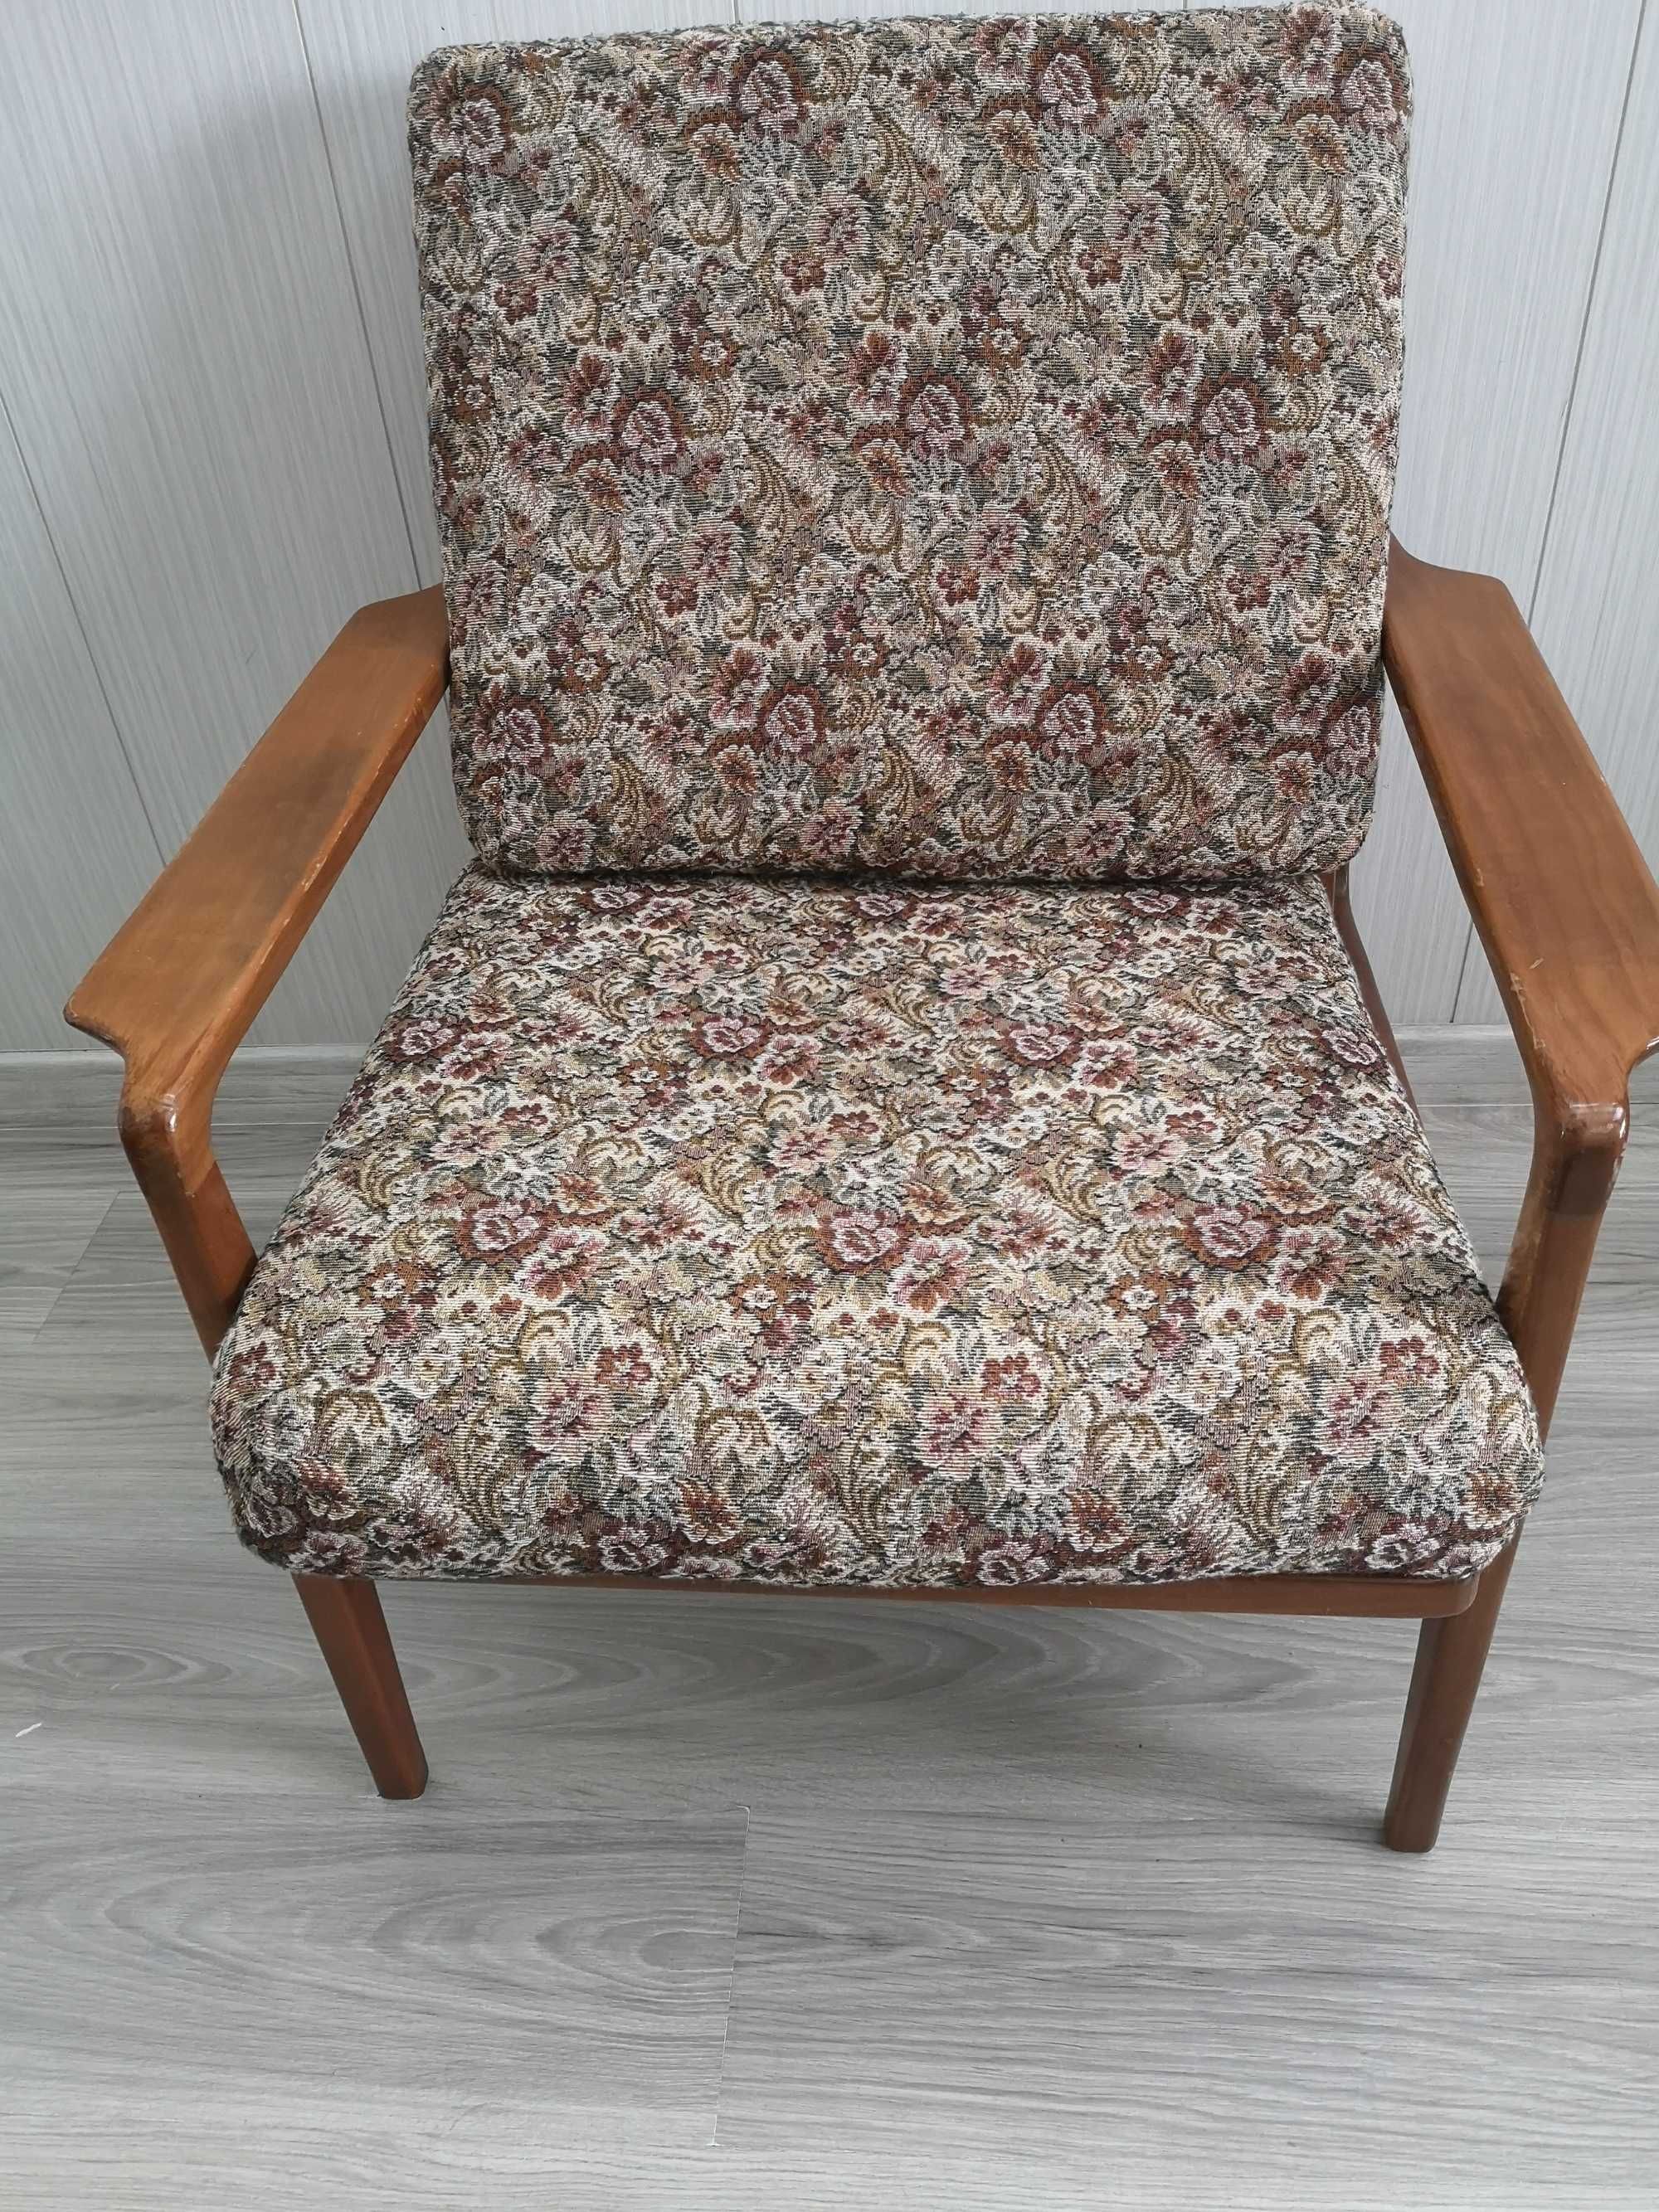 Fotel duński duńczyk odcienie brązu vintage retro lata 60 70